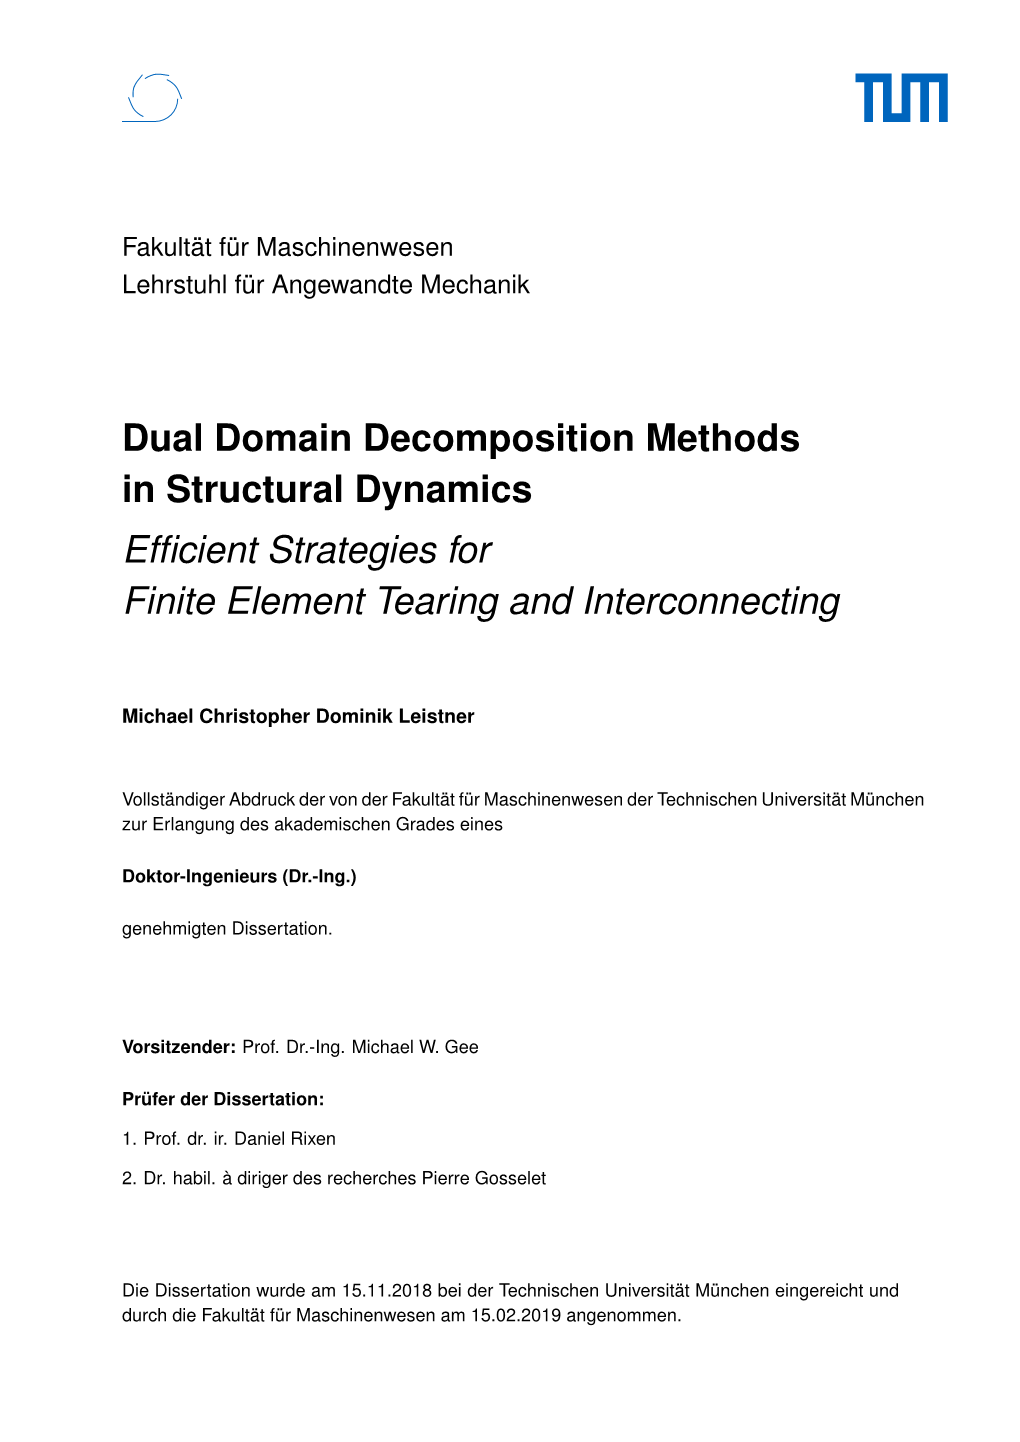 Dual Domain Decomposition Methods in Structural Dynamics, Efficient